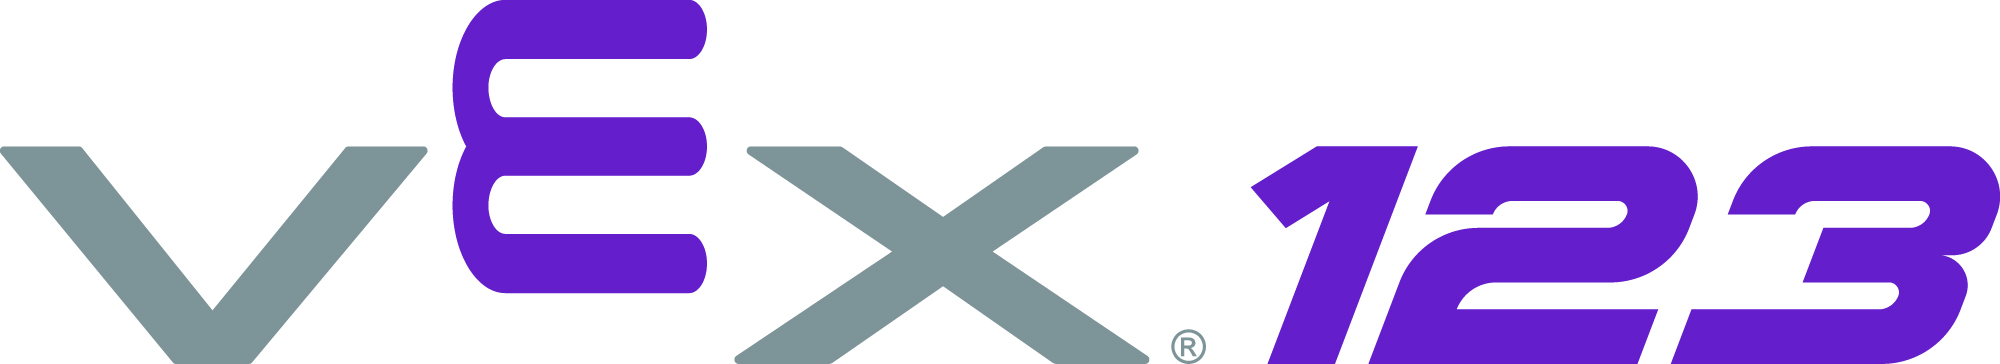 VEX 123 Logo